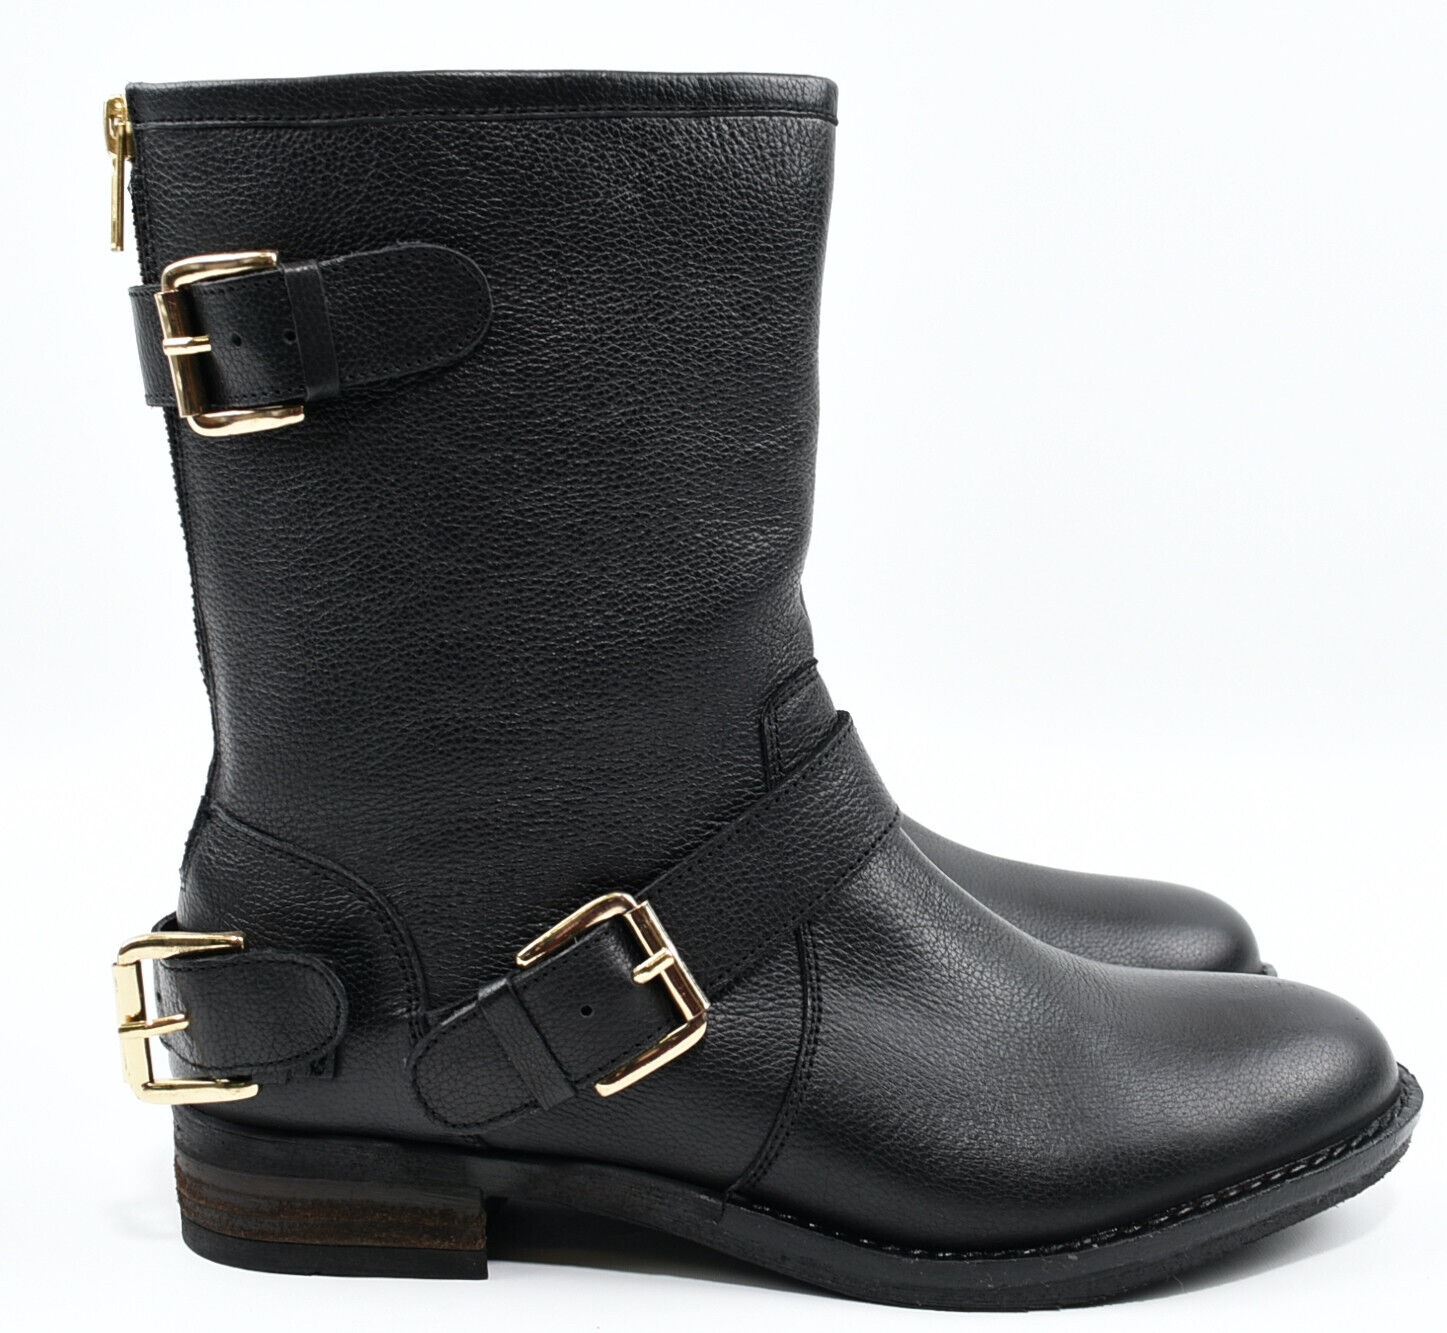 DUNE Women's RIFF 2 Boots, Genuine Leather, Black, size UK 6 /EU 39